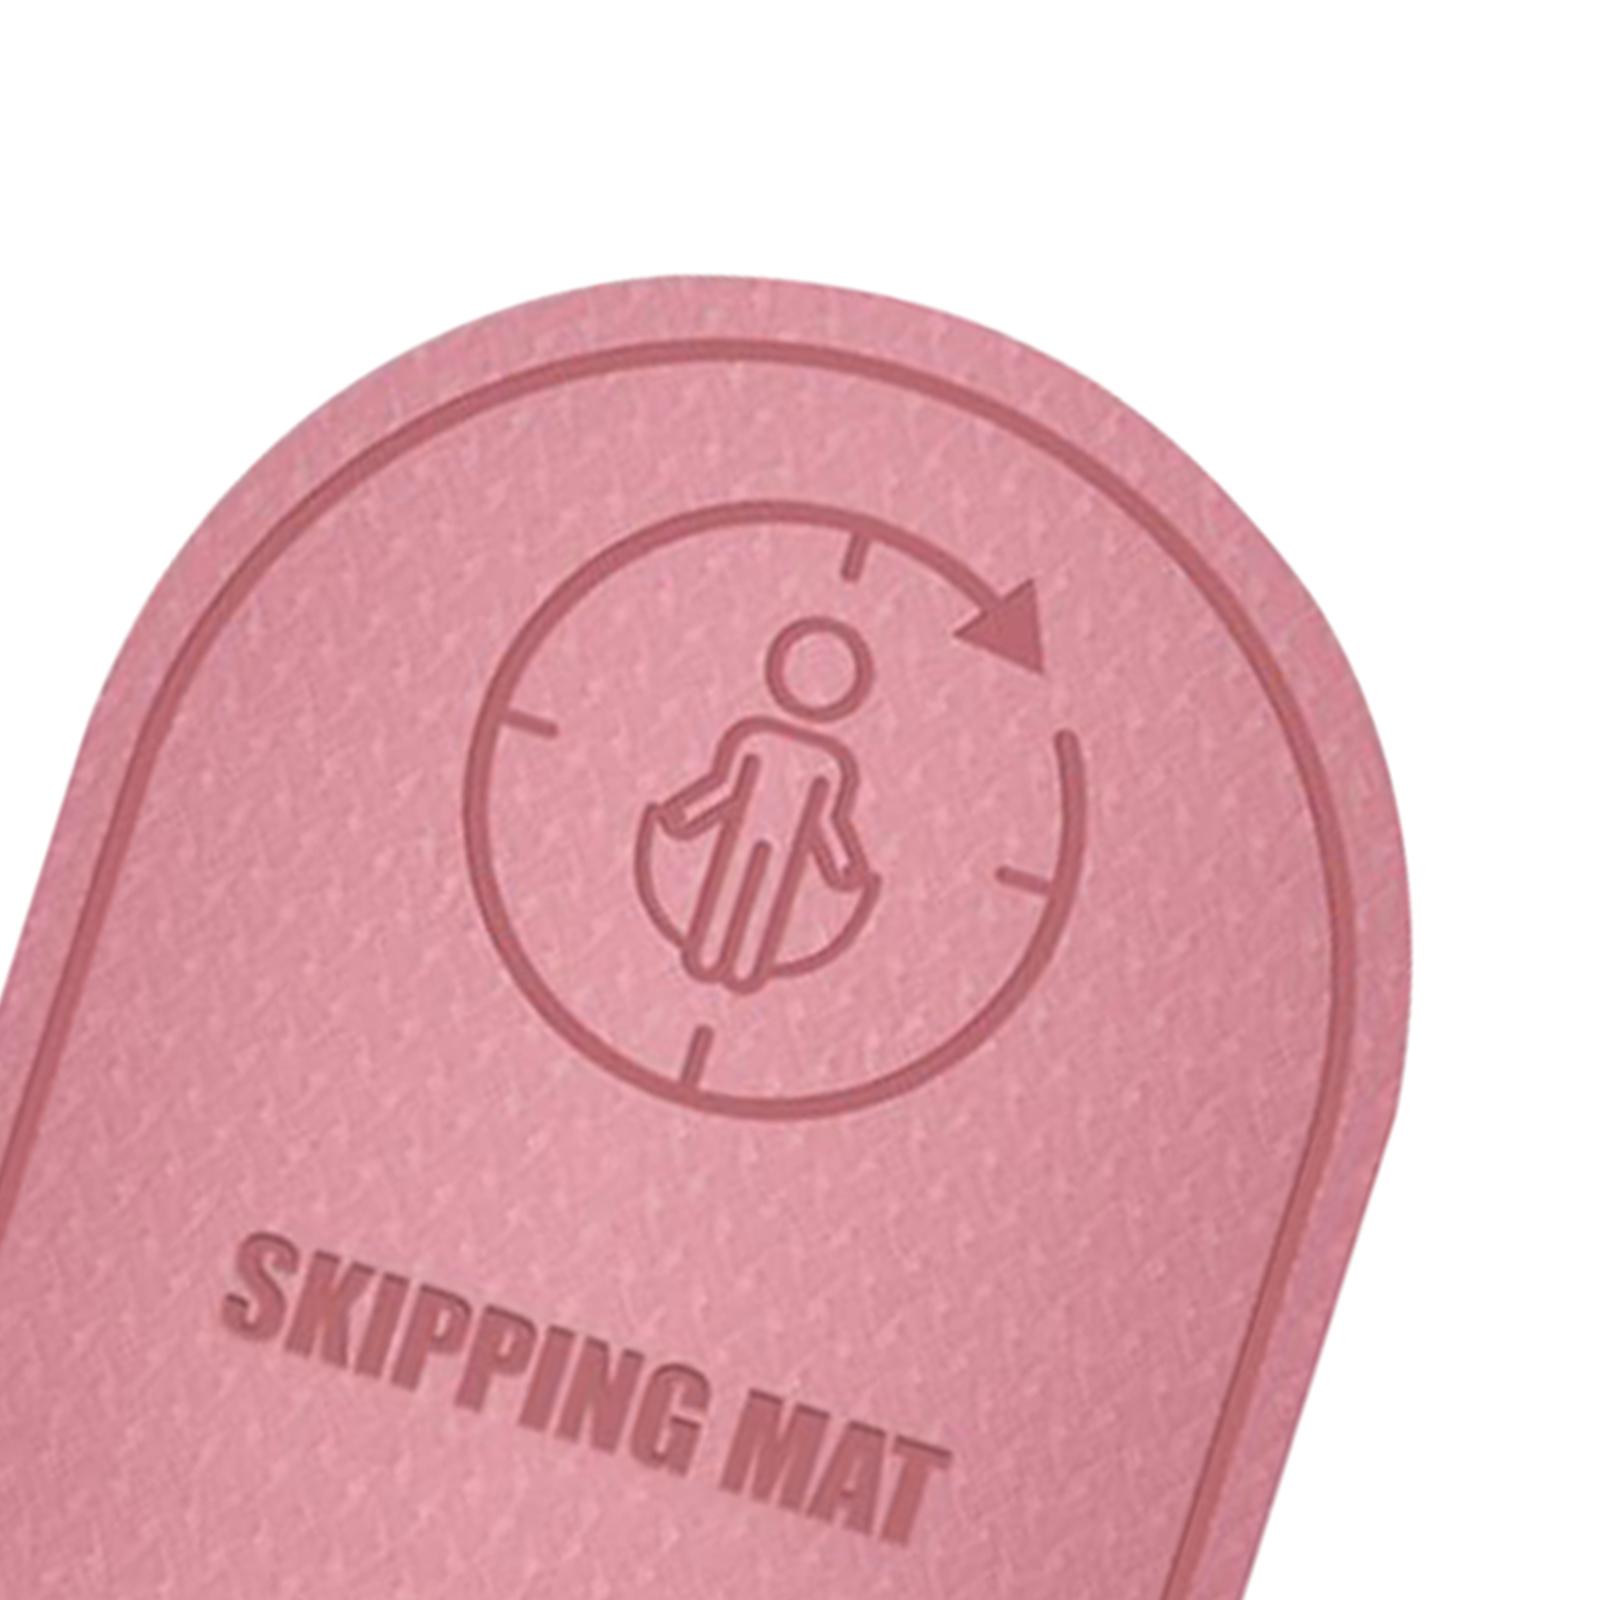 Exercise Skipping Mat High Density Anti Slip Cushion Yoga Mat Buffer Pad Pink Thick 6mm